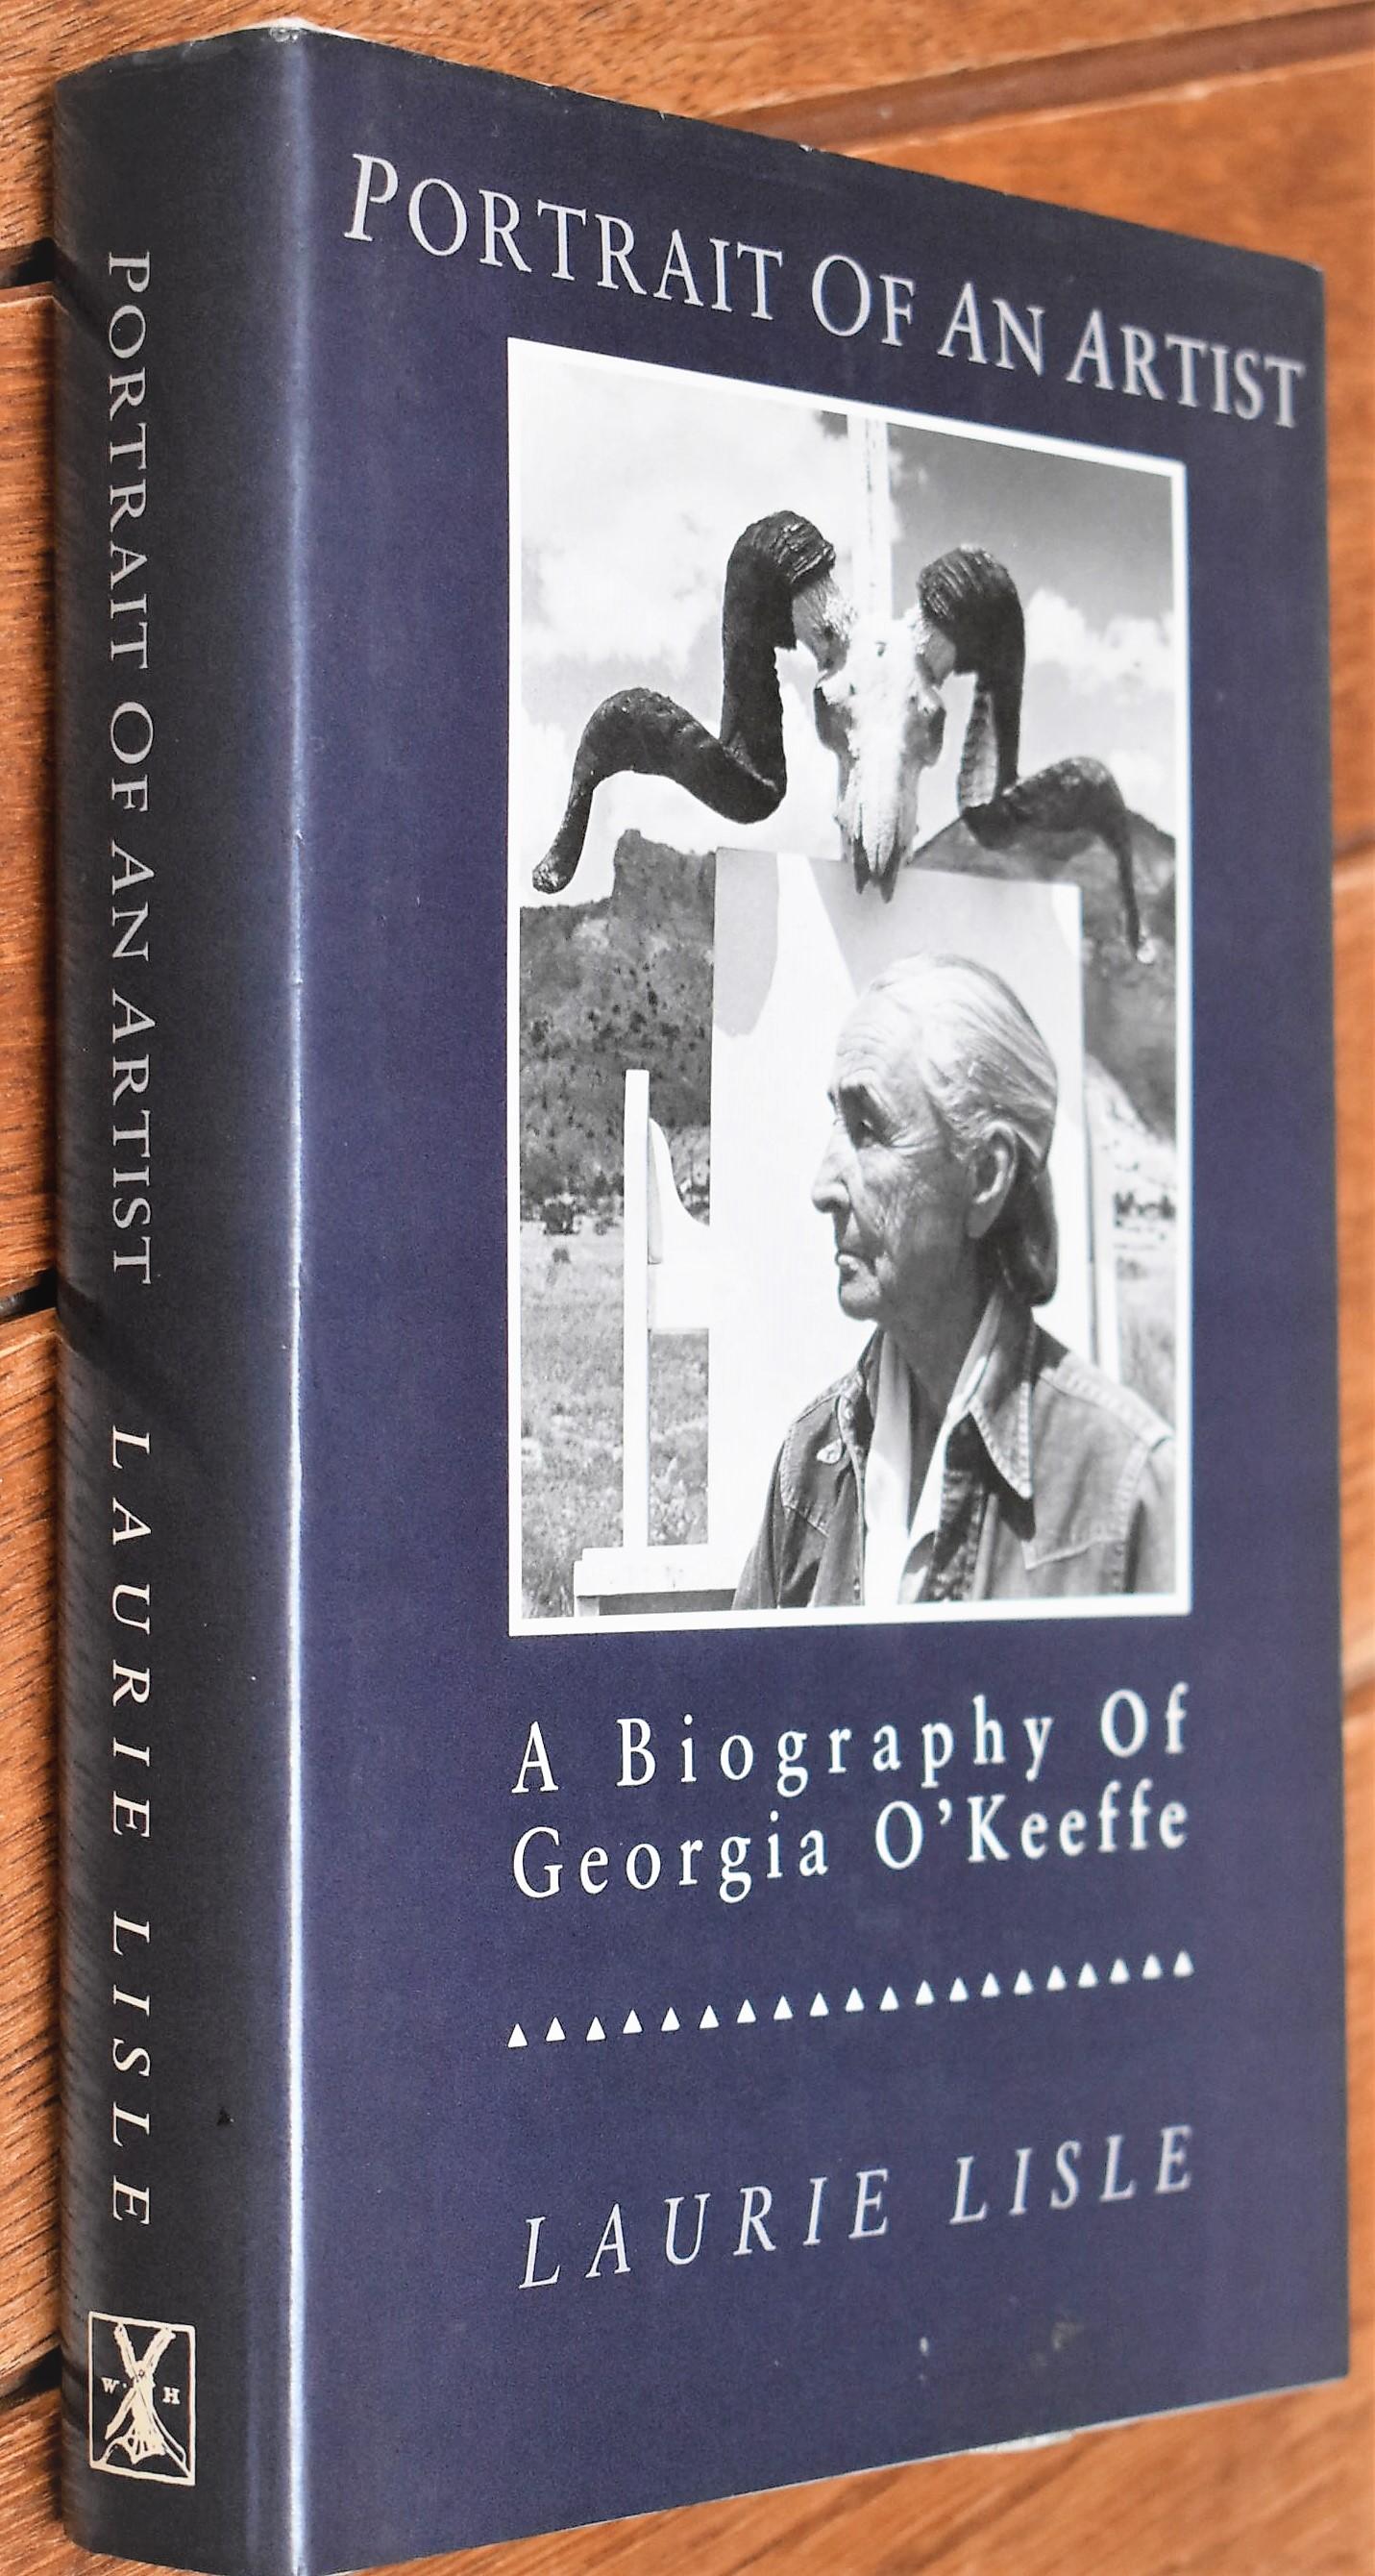 PORTRAIT OF AN ARTIST A Biography of Georgia O'Keeffe - Laurie Lisle